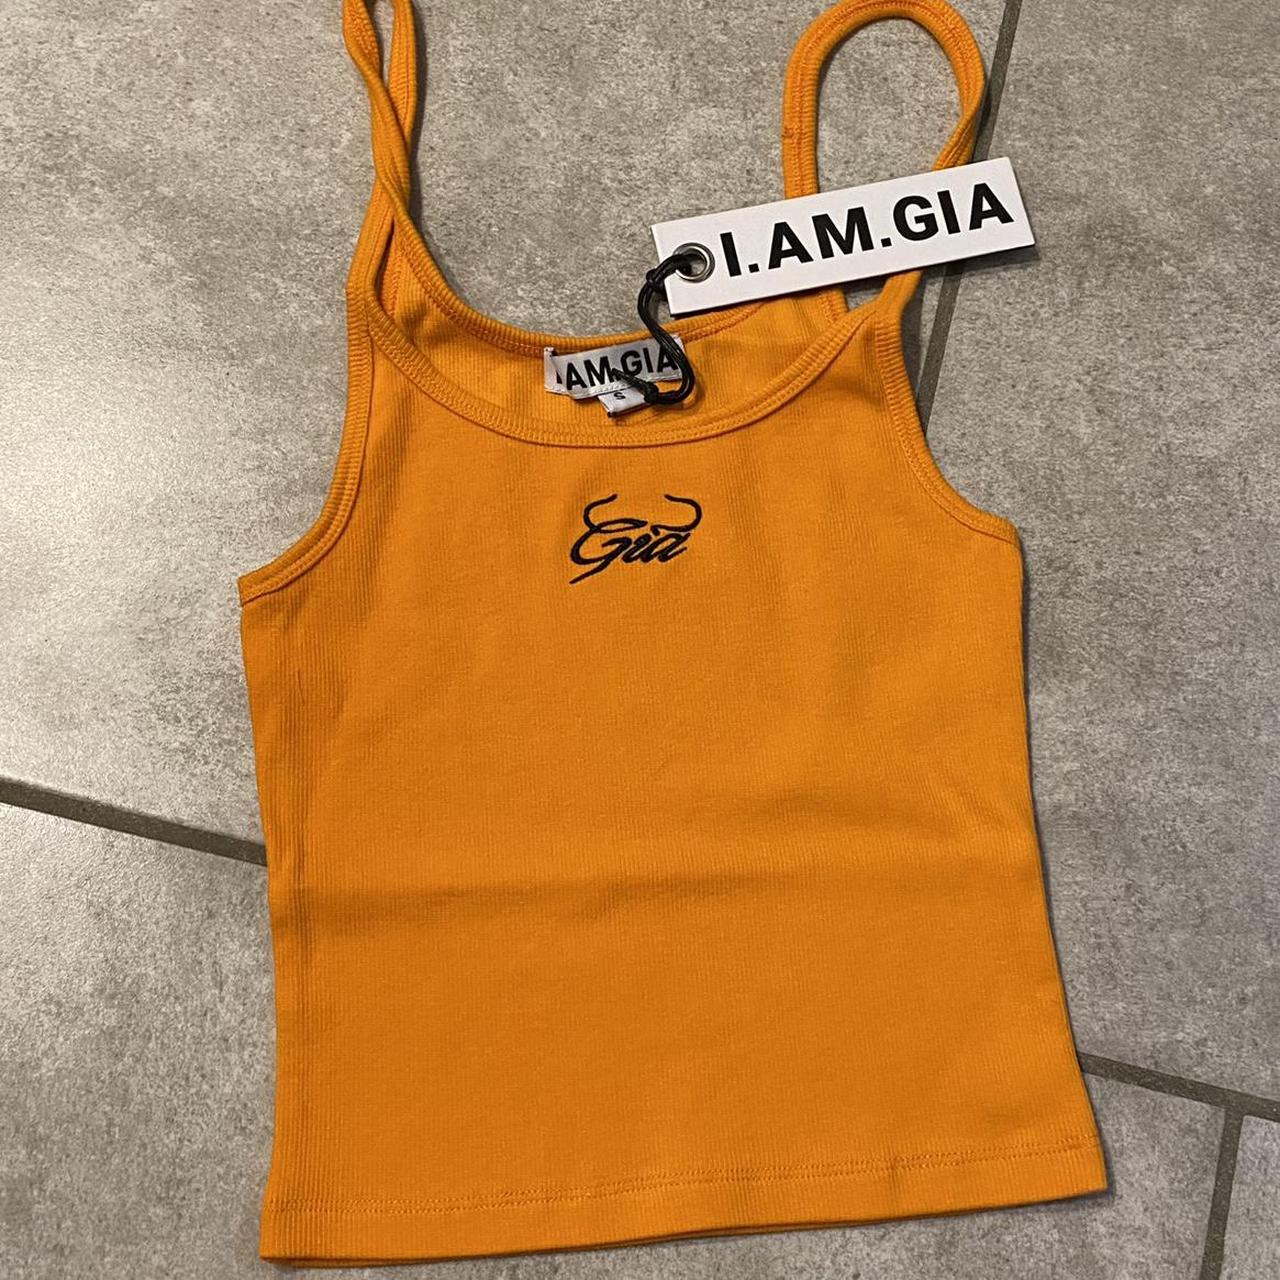 I.AM.GIA Women's Orange Vests-tanks-camis